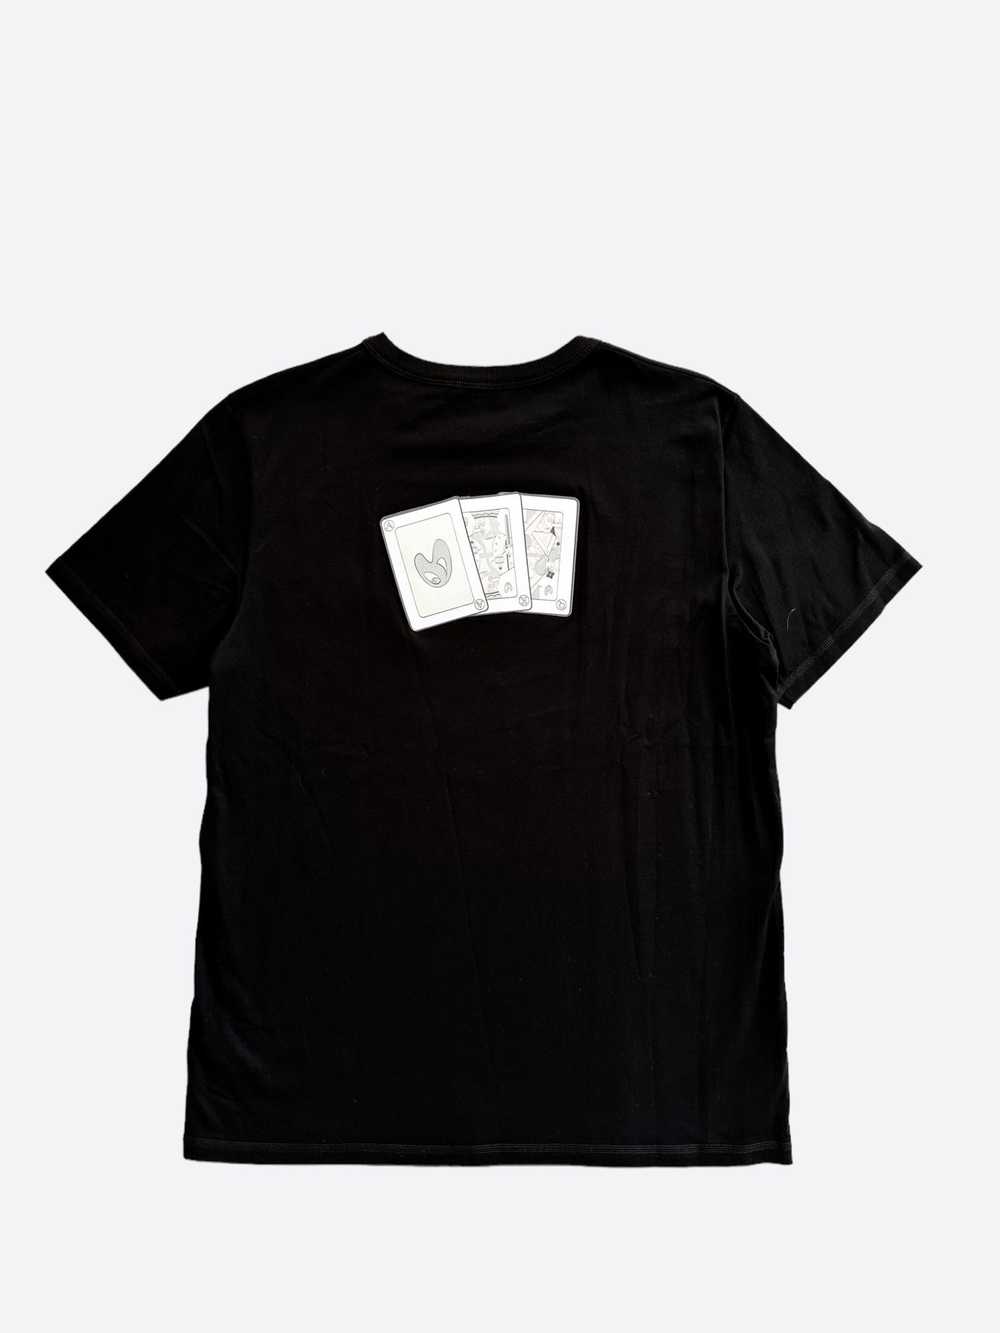 Dior Dior Kenny Scharf Black Cards T-Shirt - image 2